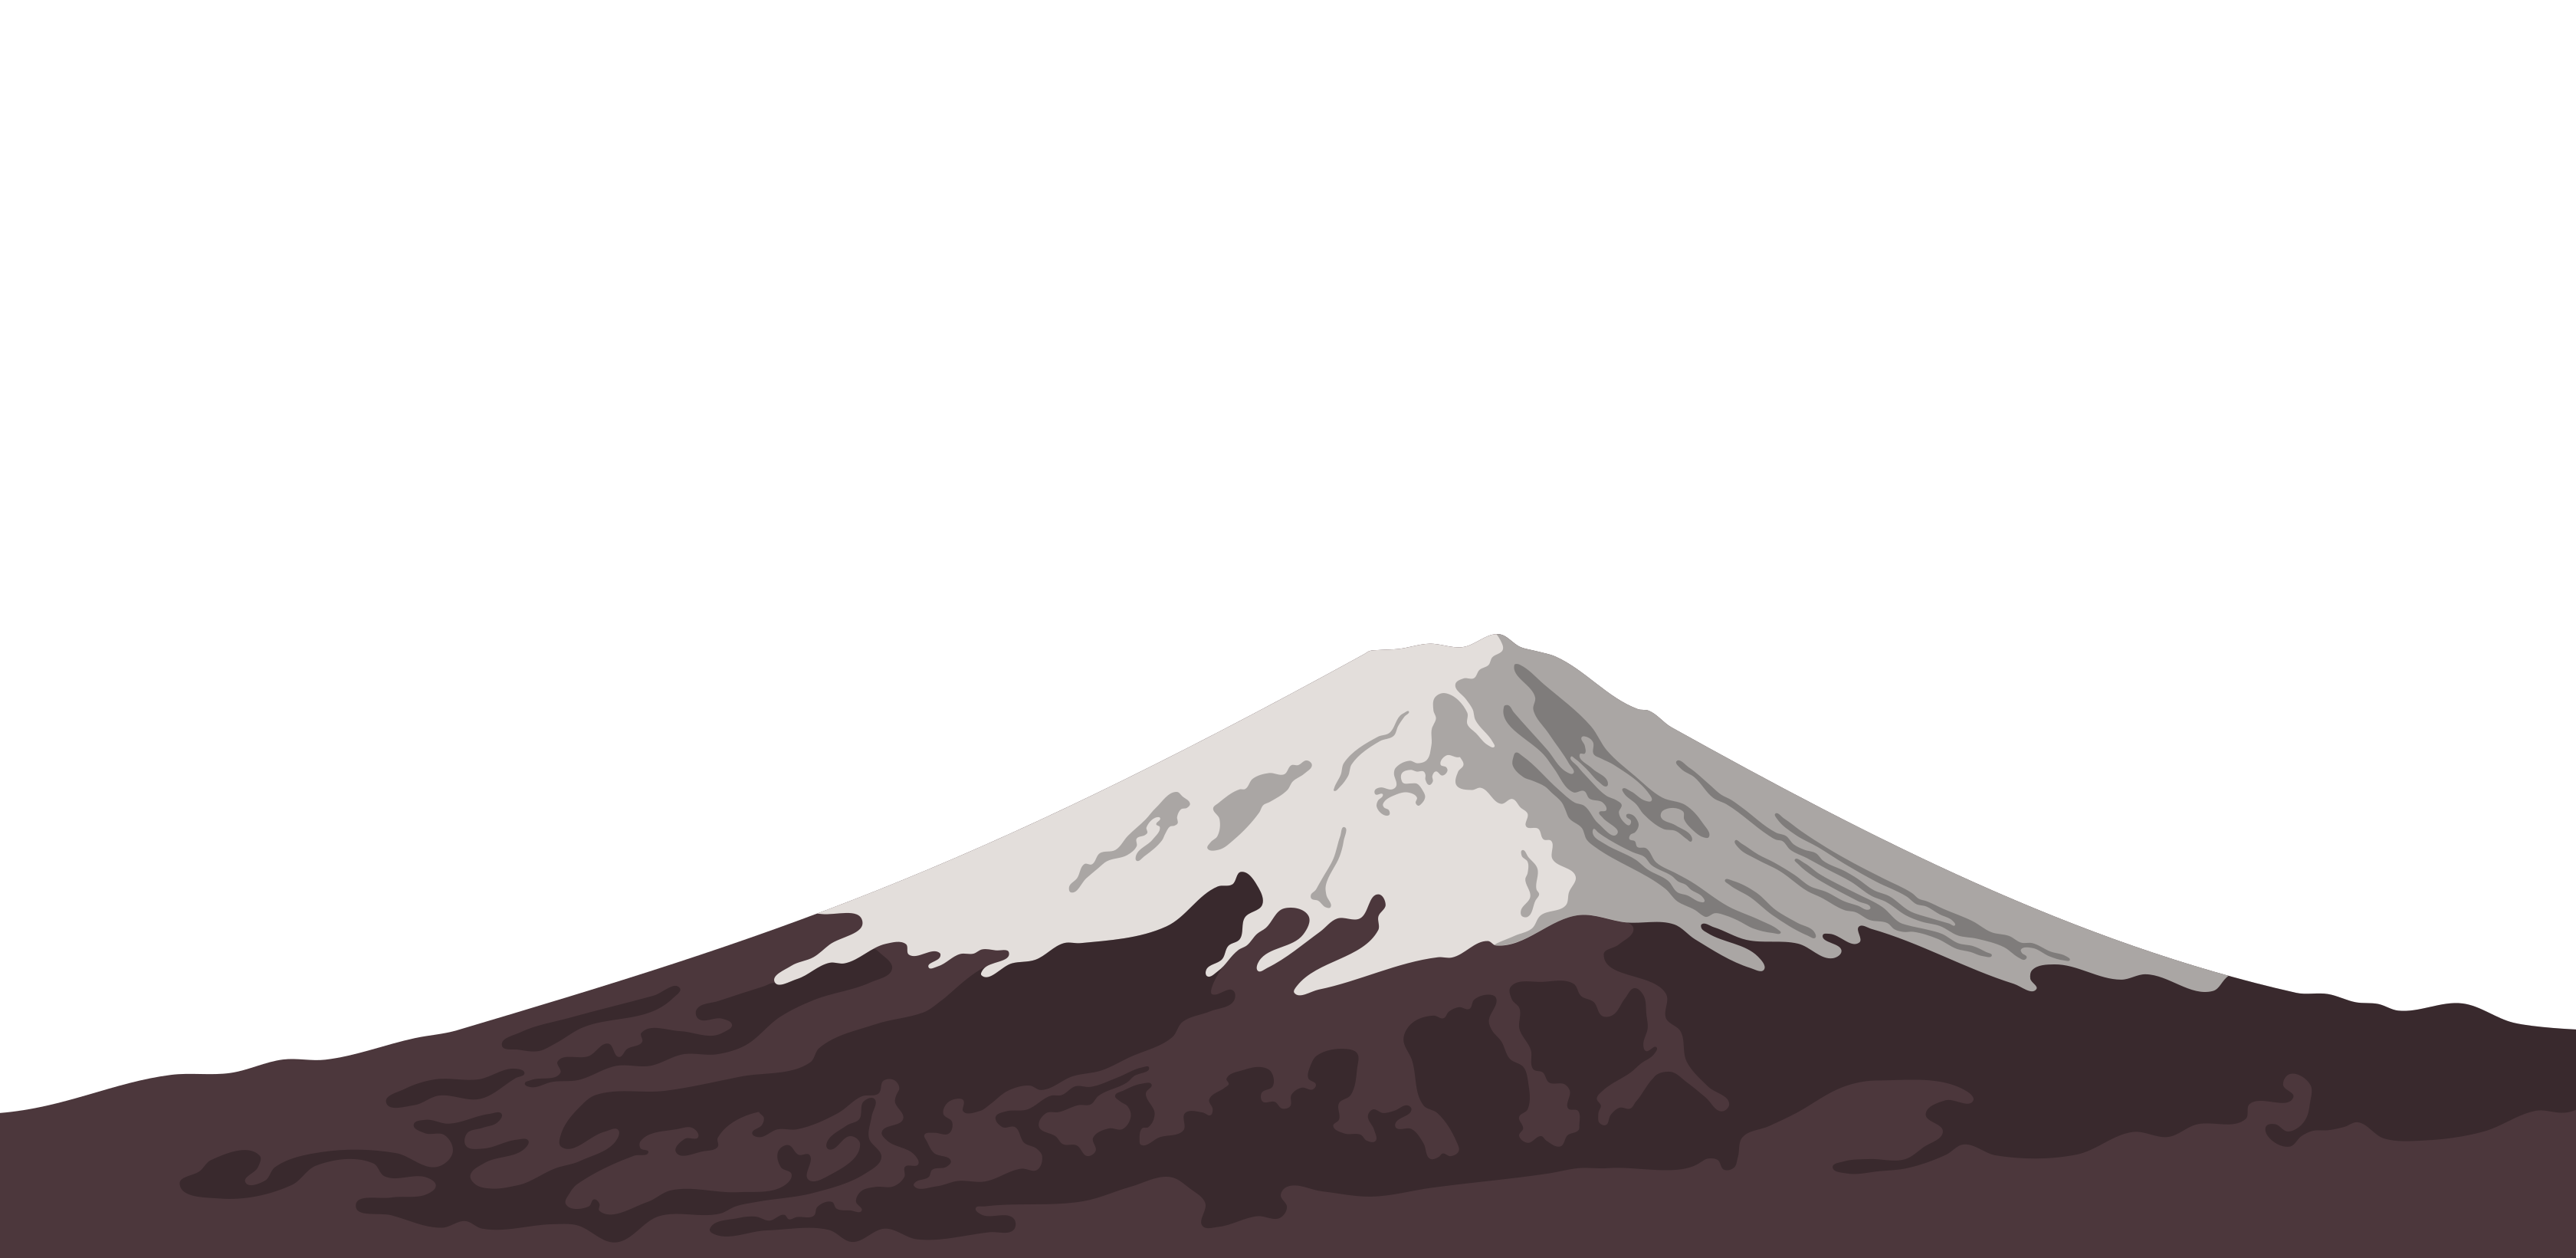 Mount Fuji svg #6, Download drawings